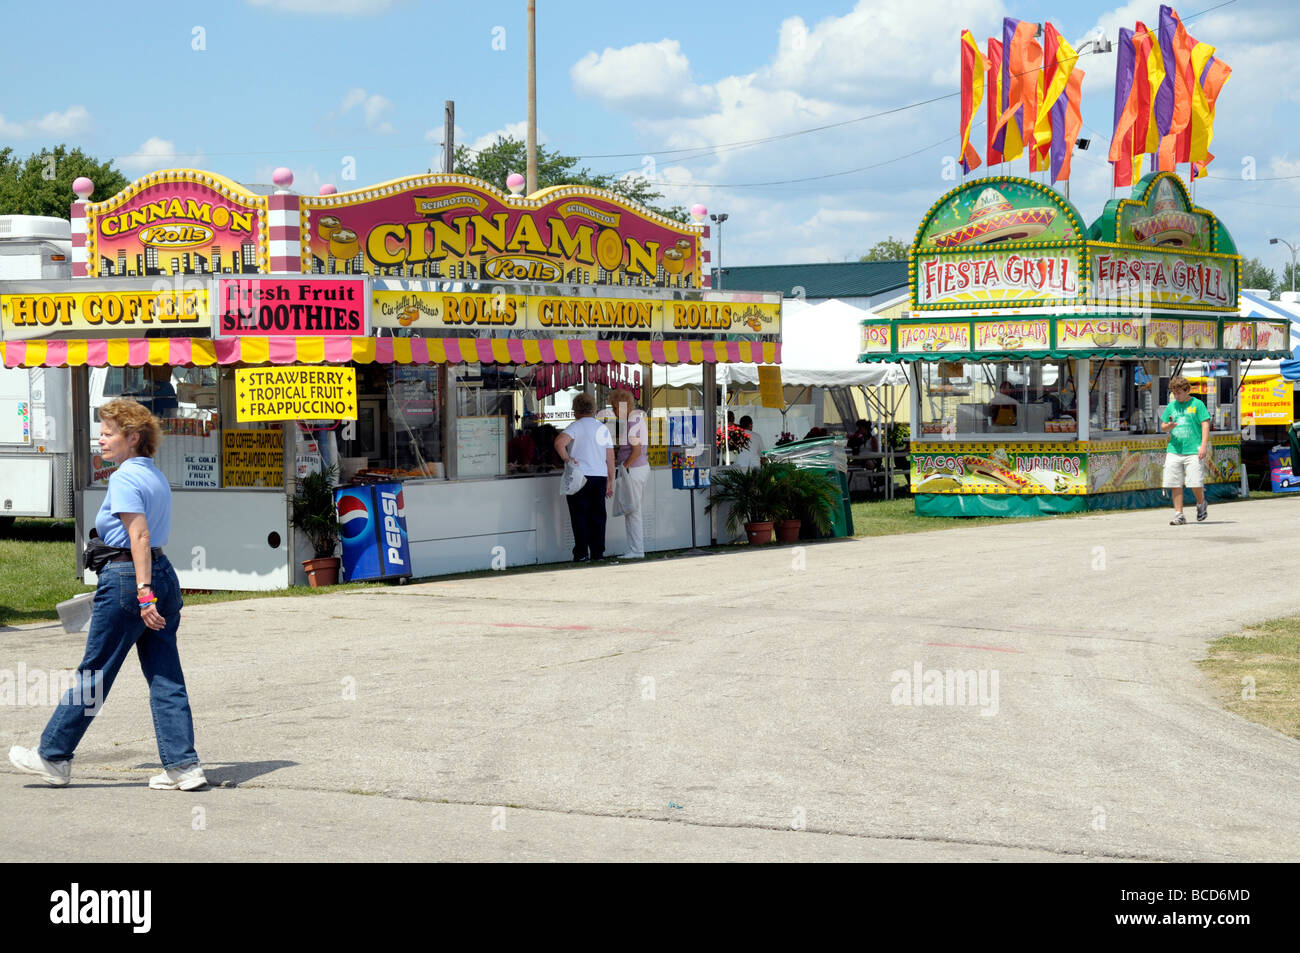 The Monroe County Fair in Michigan Stock Photo